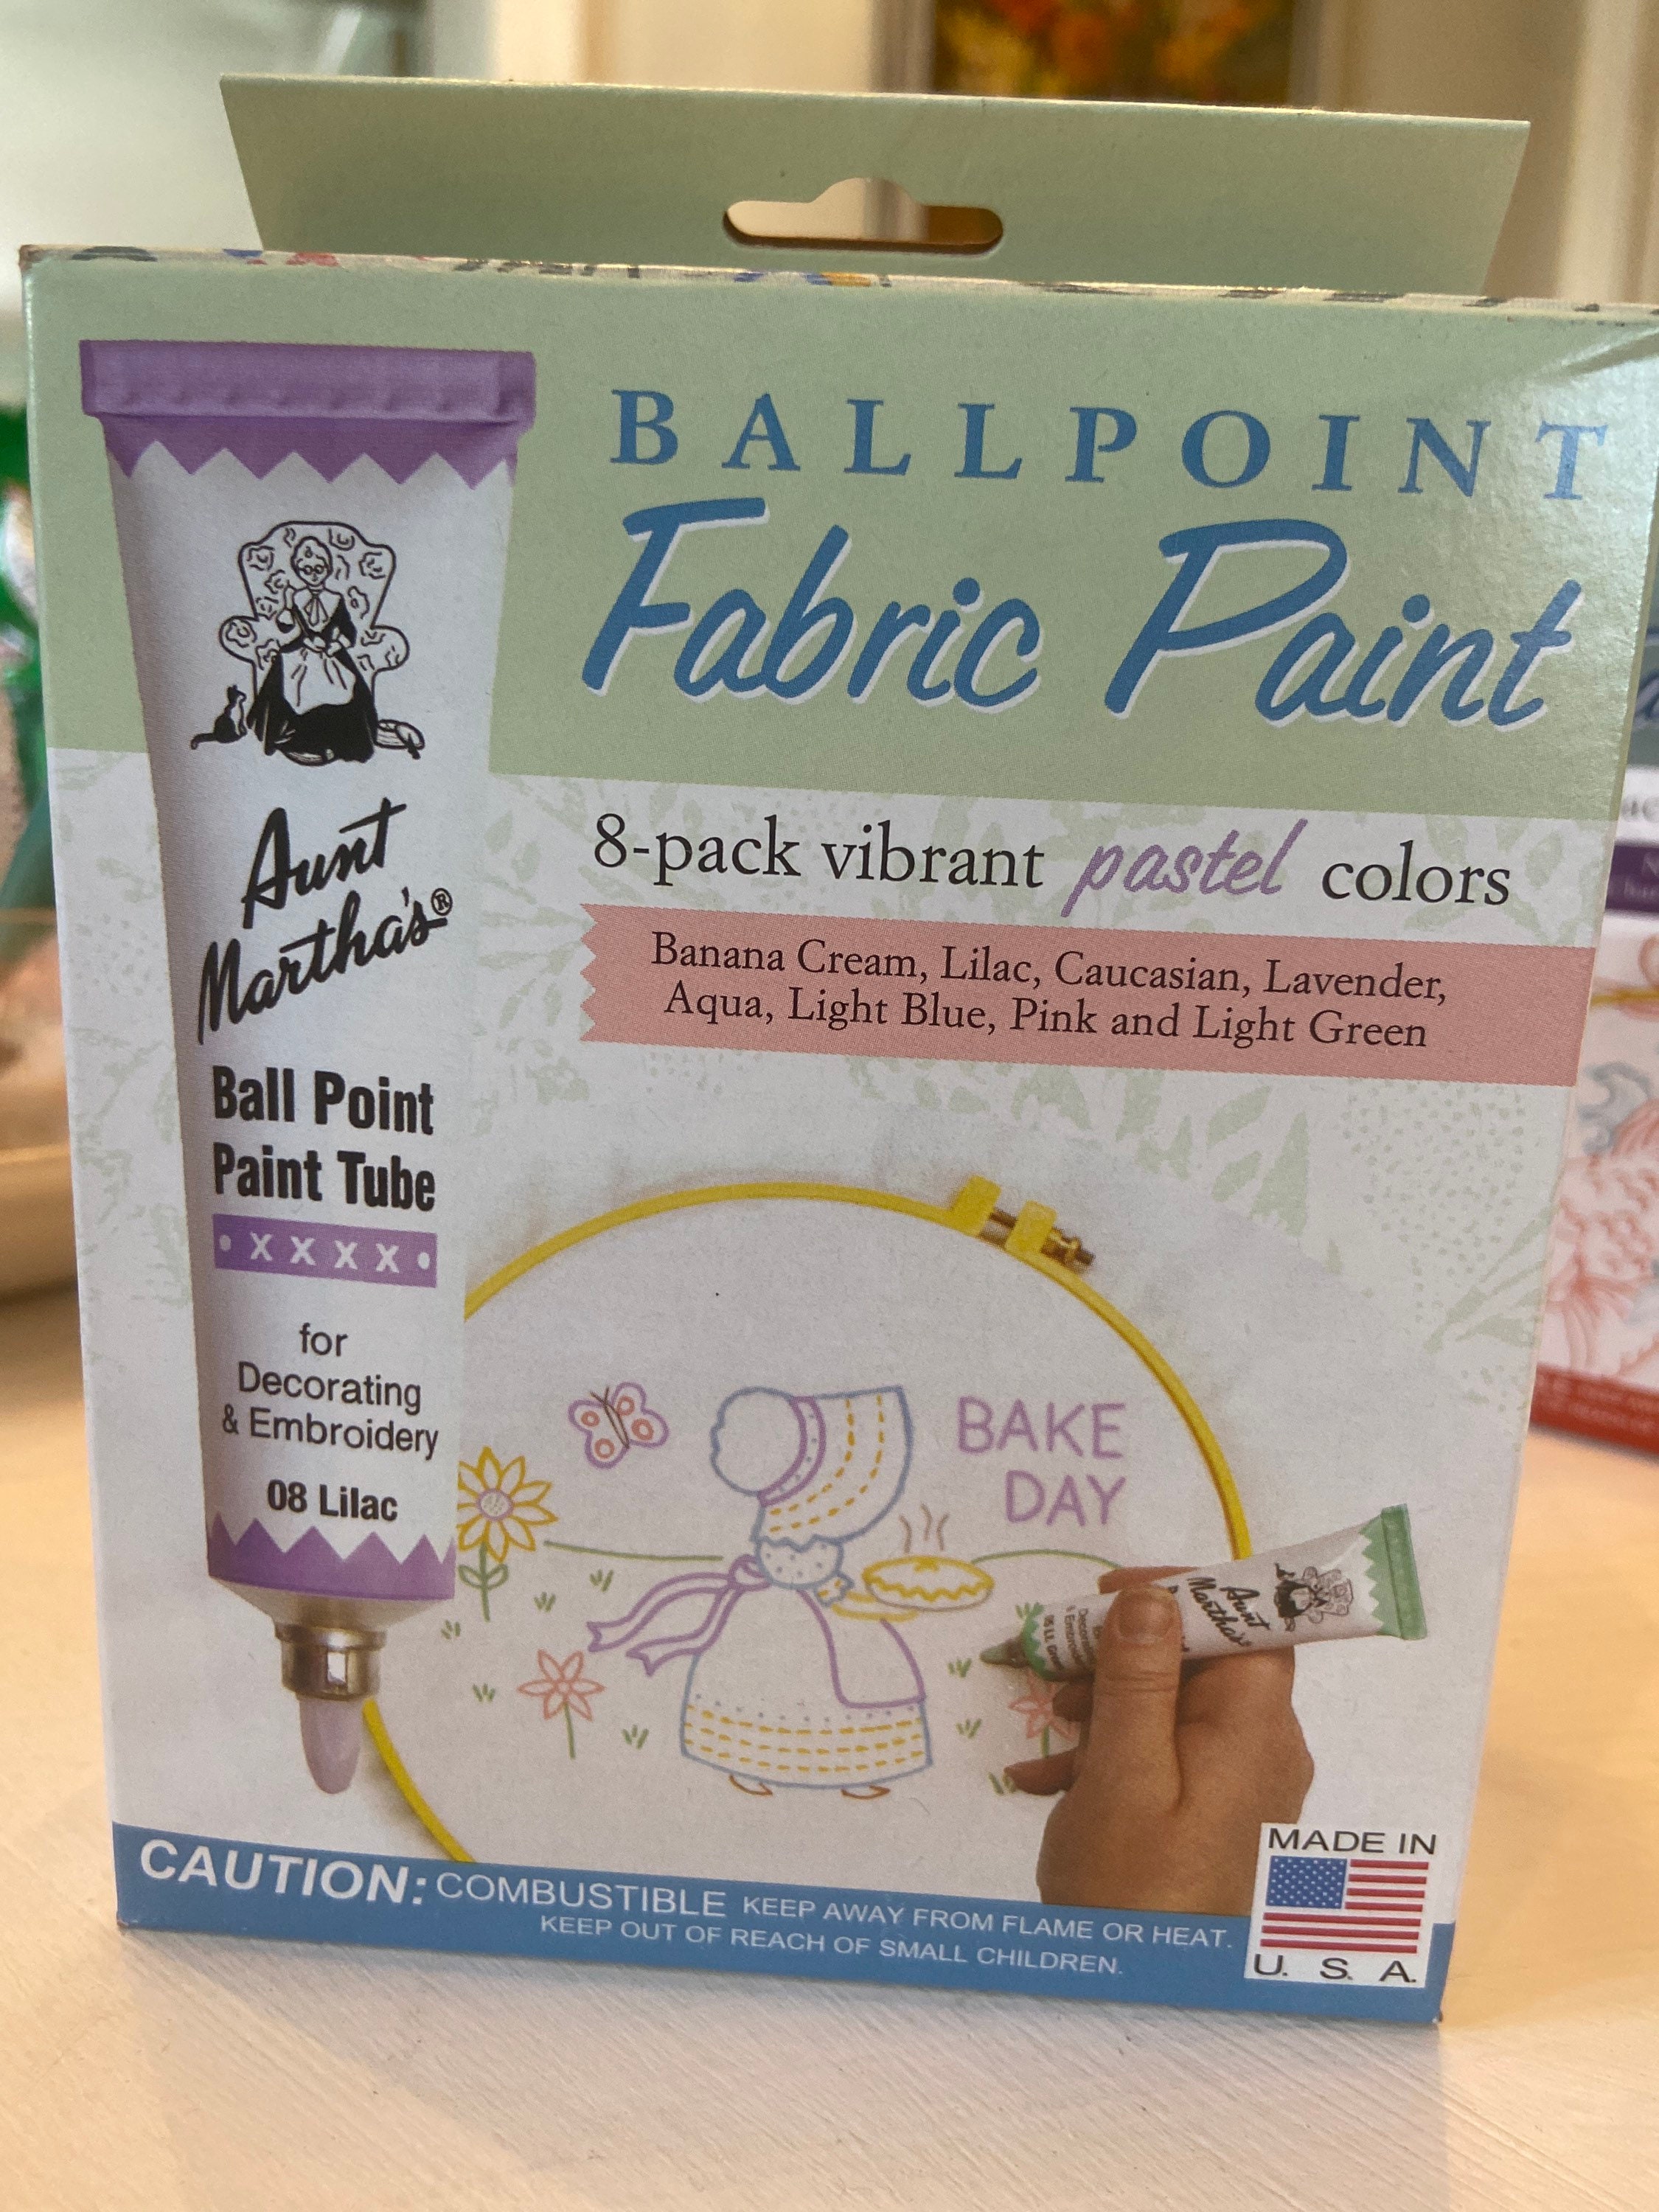 Aunt Martha's Ballpoint Paint 8 Pack (Pastel) - Riley & Company